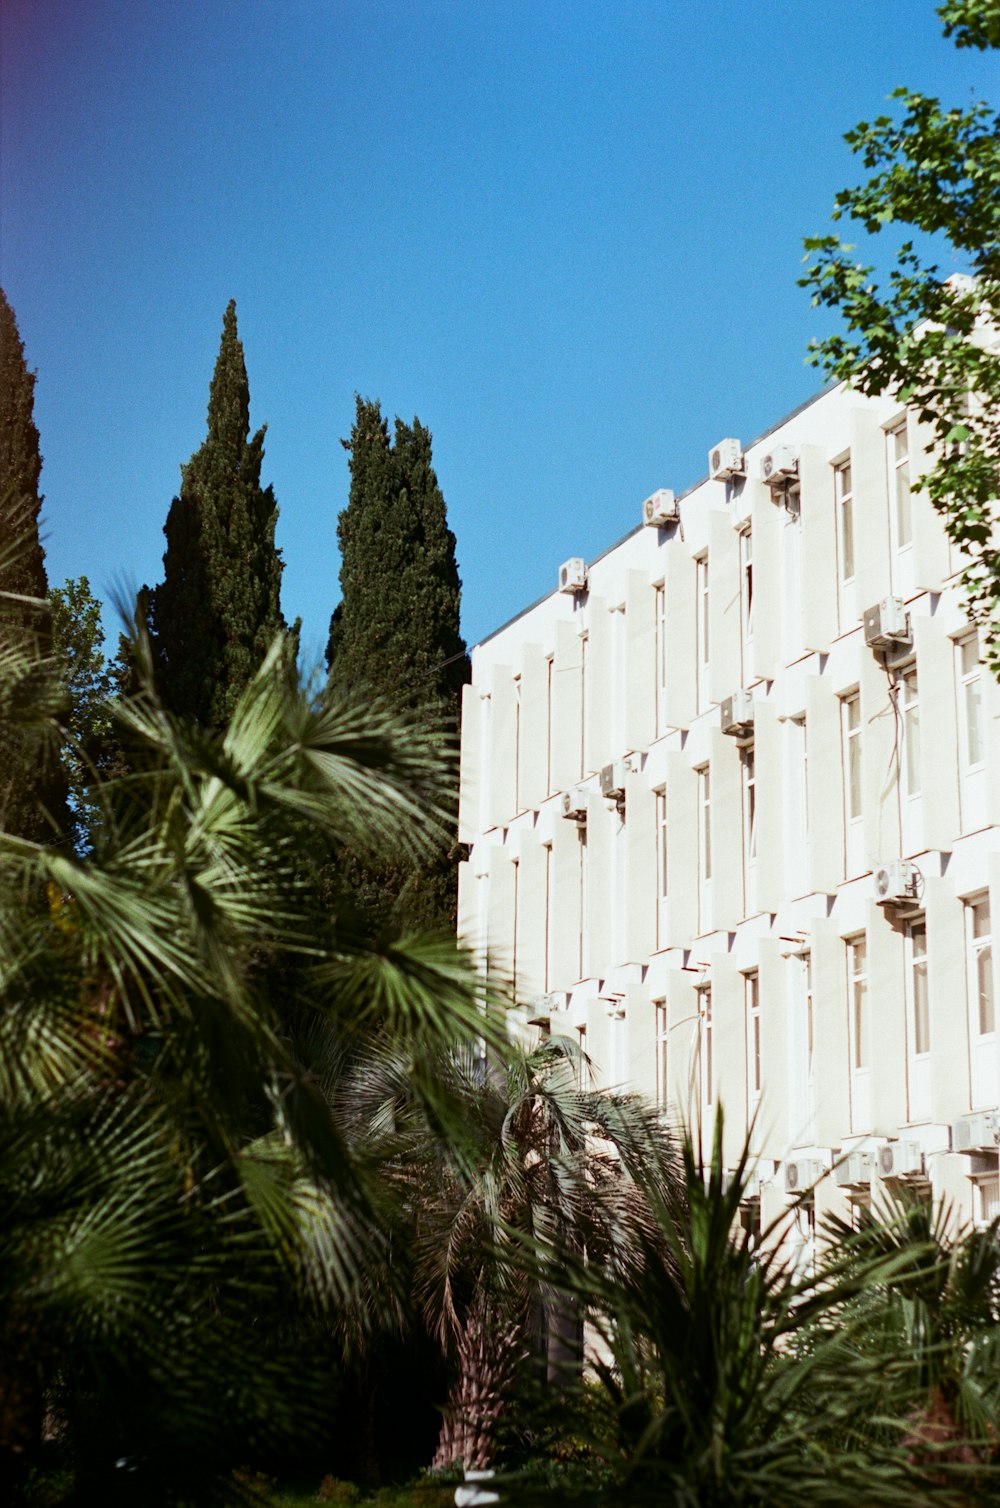 green palm tree near white concrete building